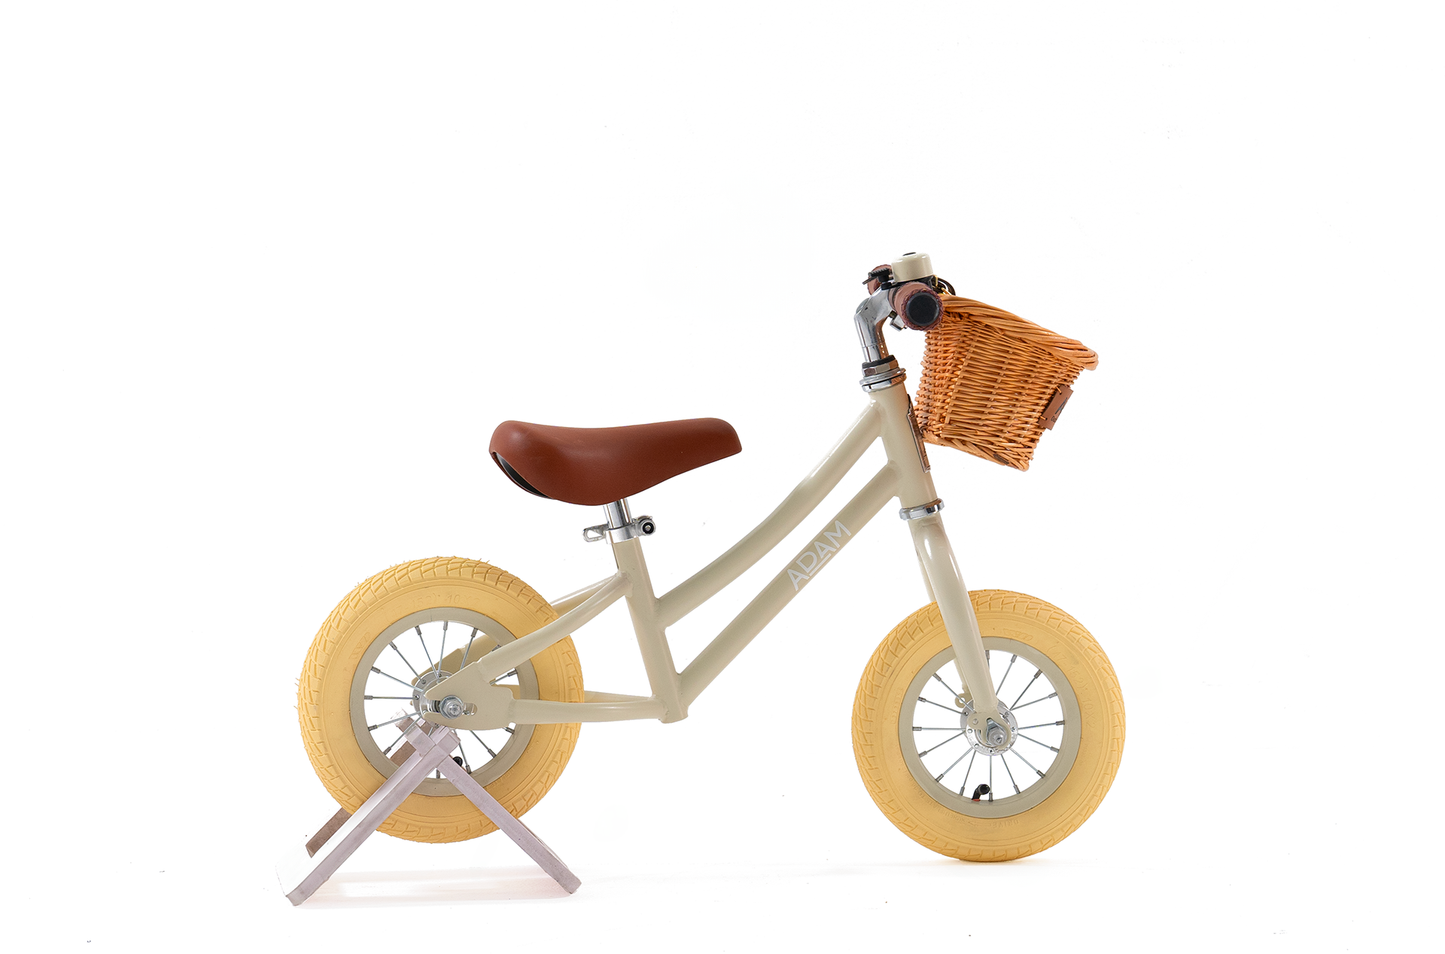 The Baby Adam 10" -  Balance bike for young children